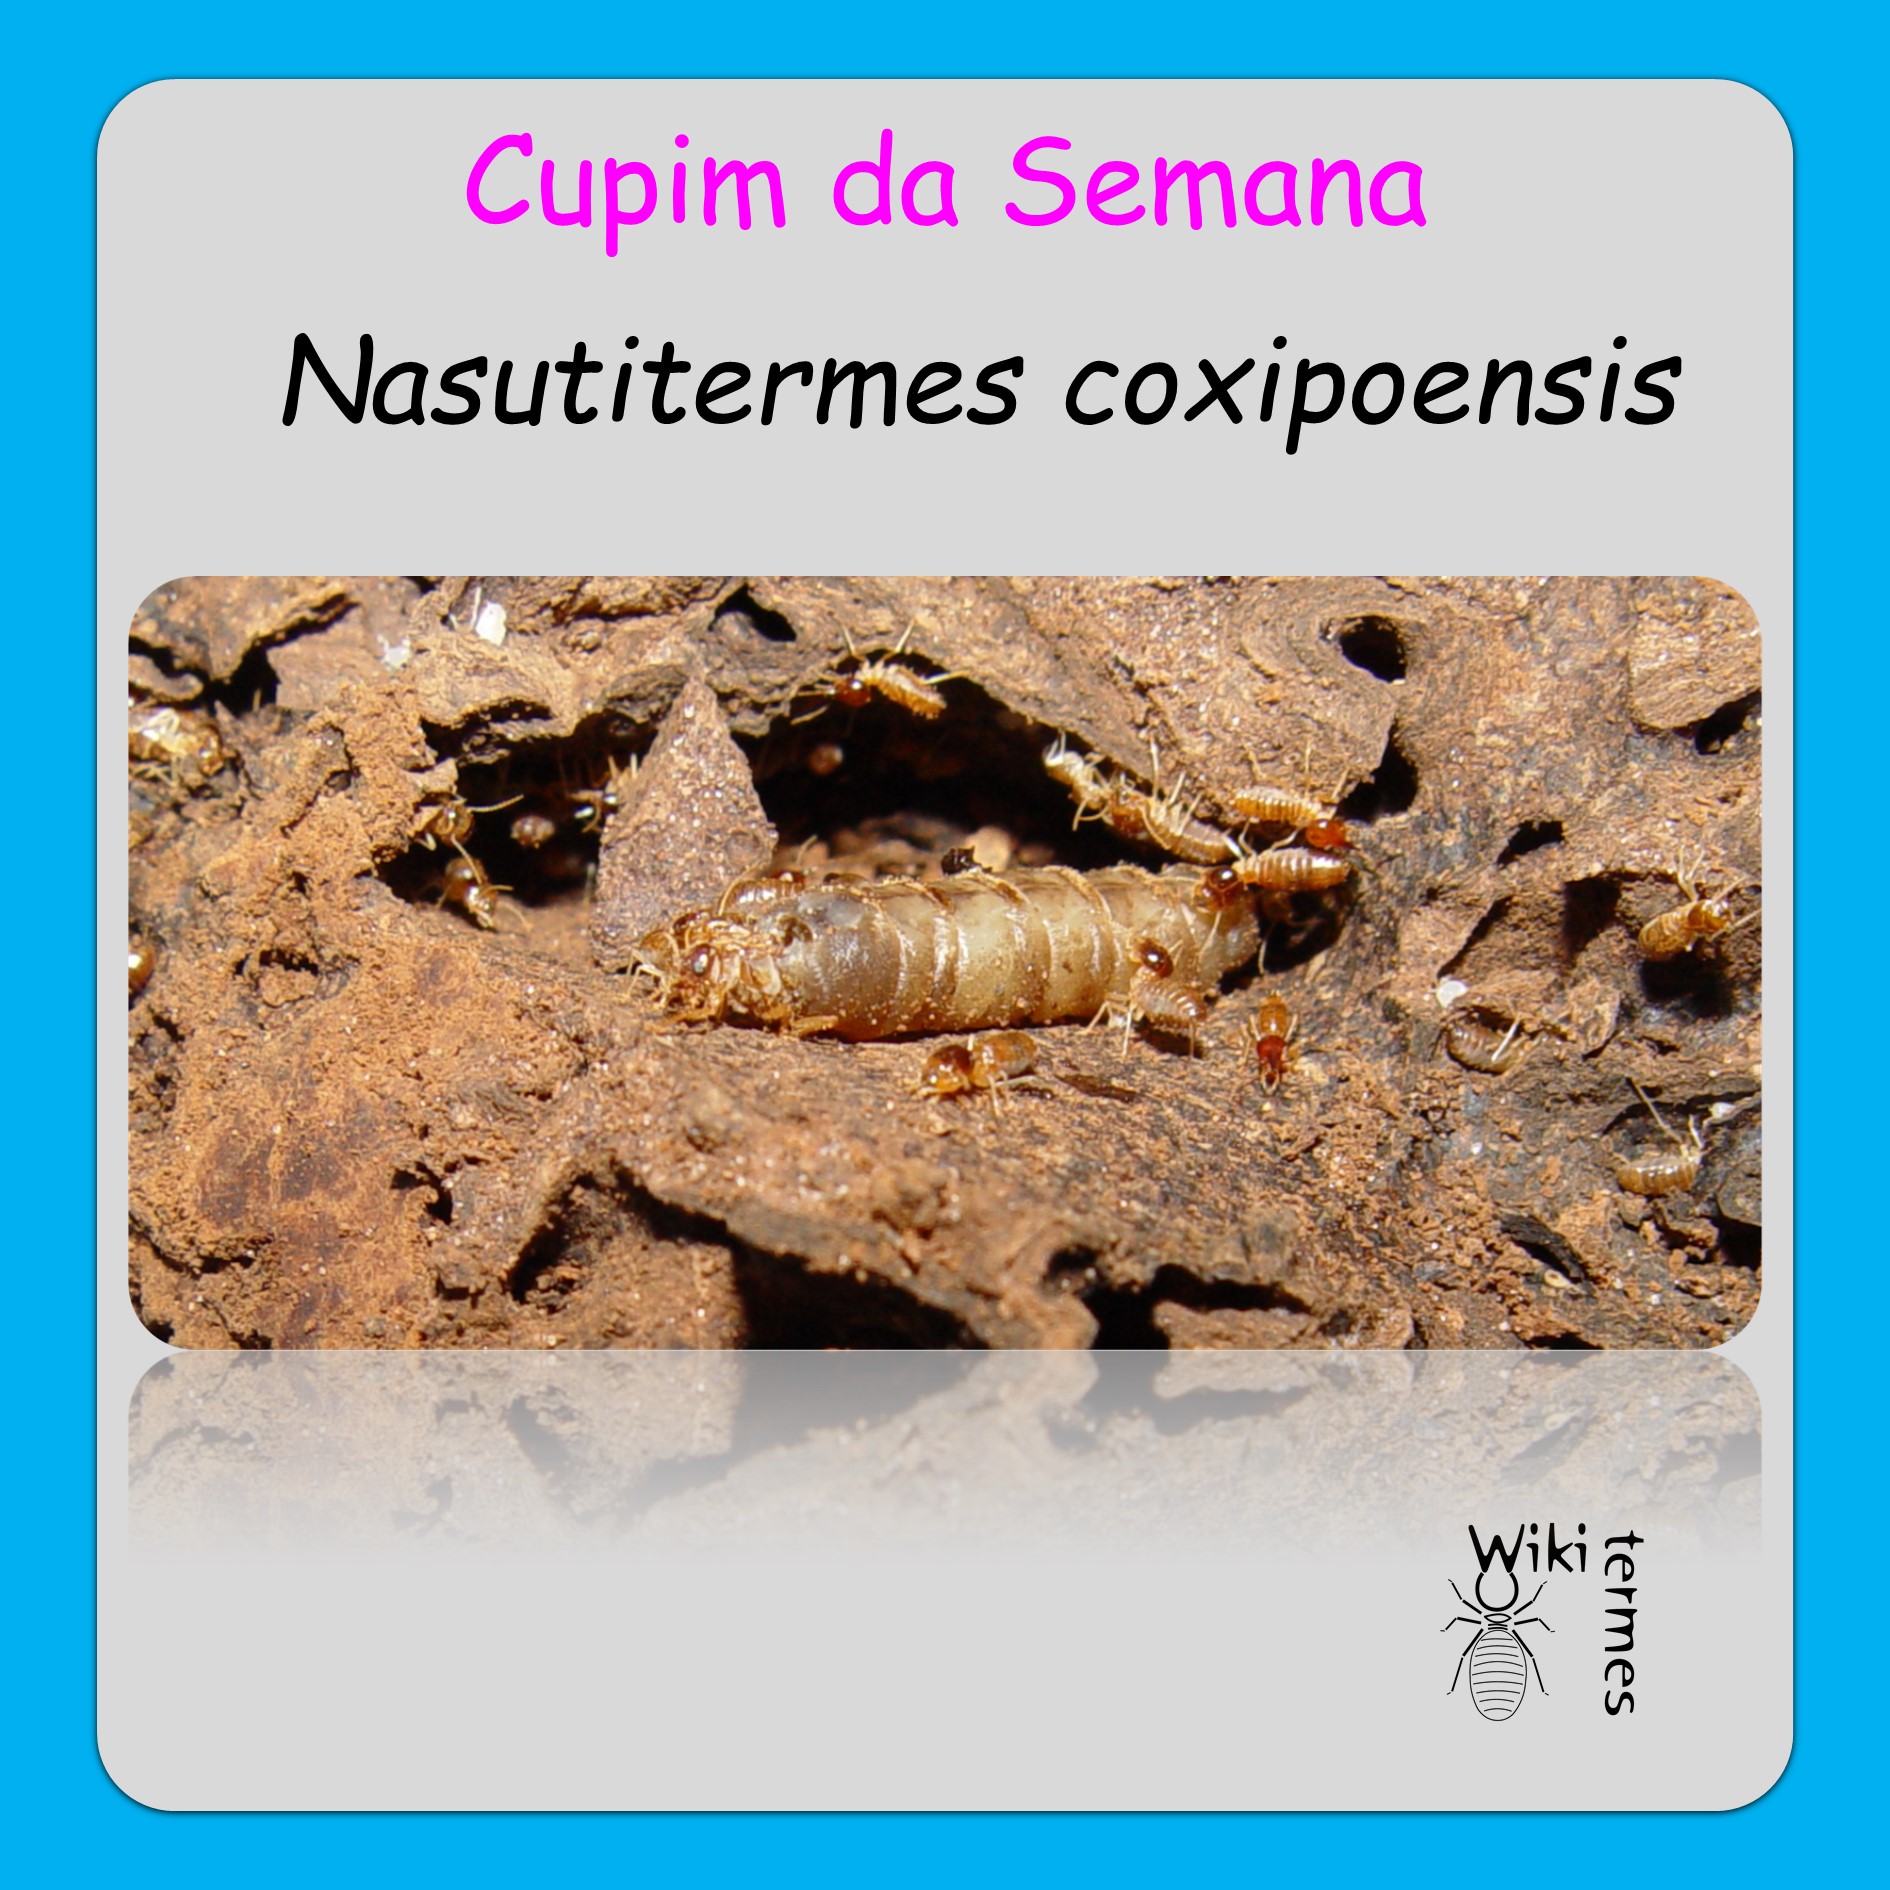 Nasutitermes coxipoensis